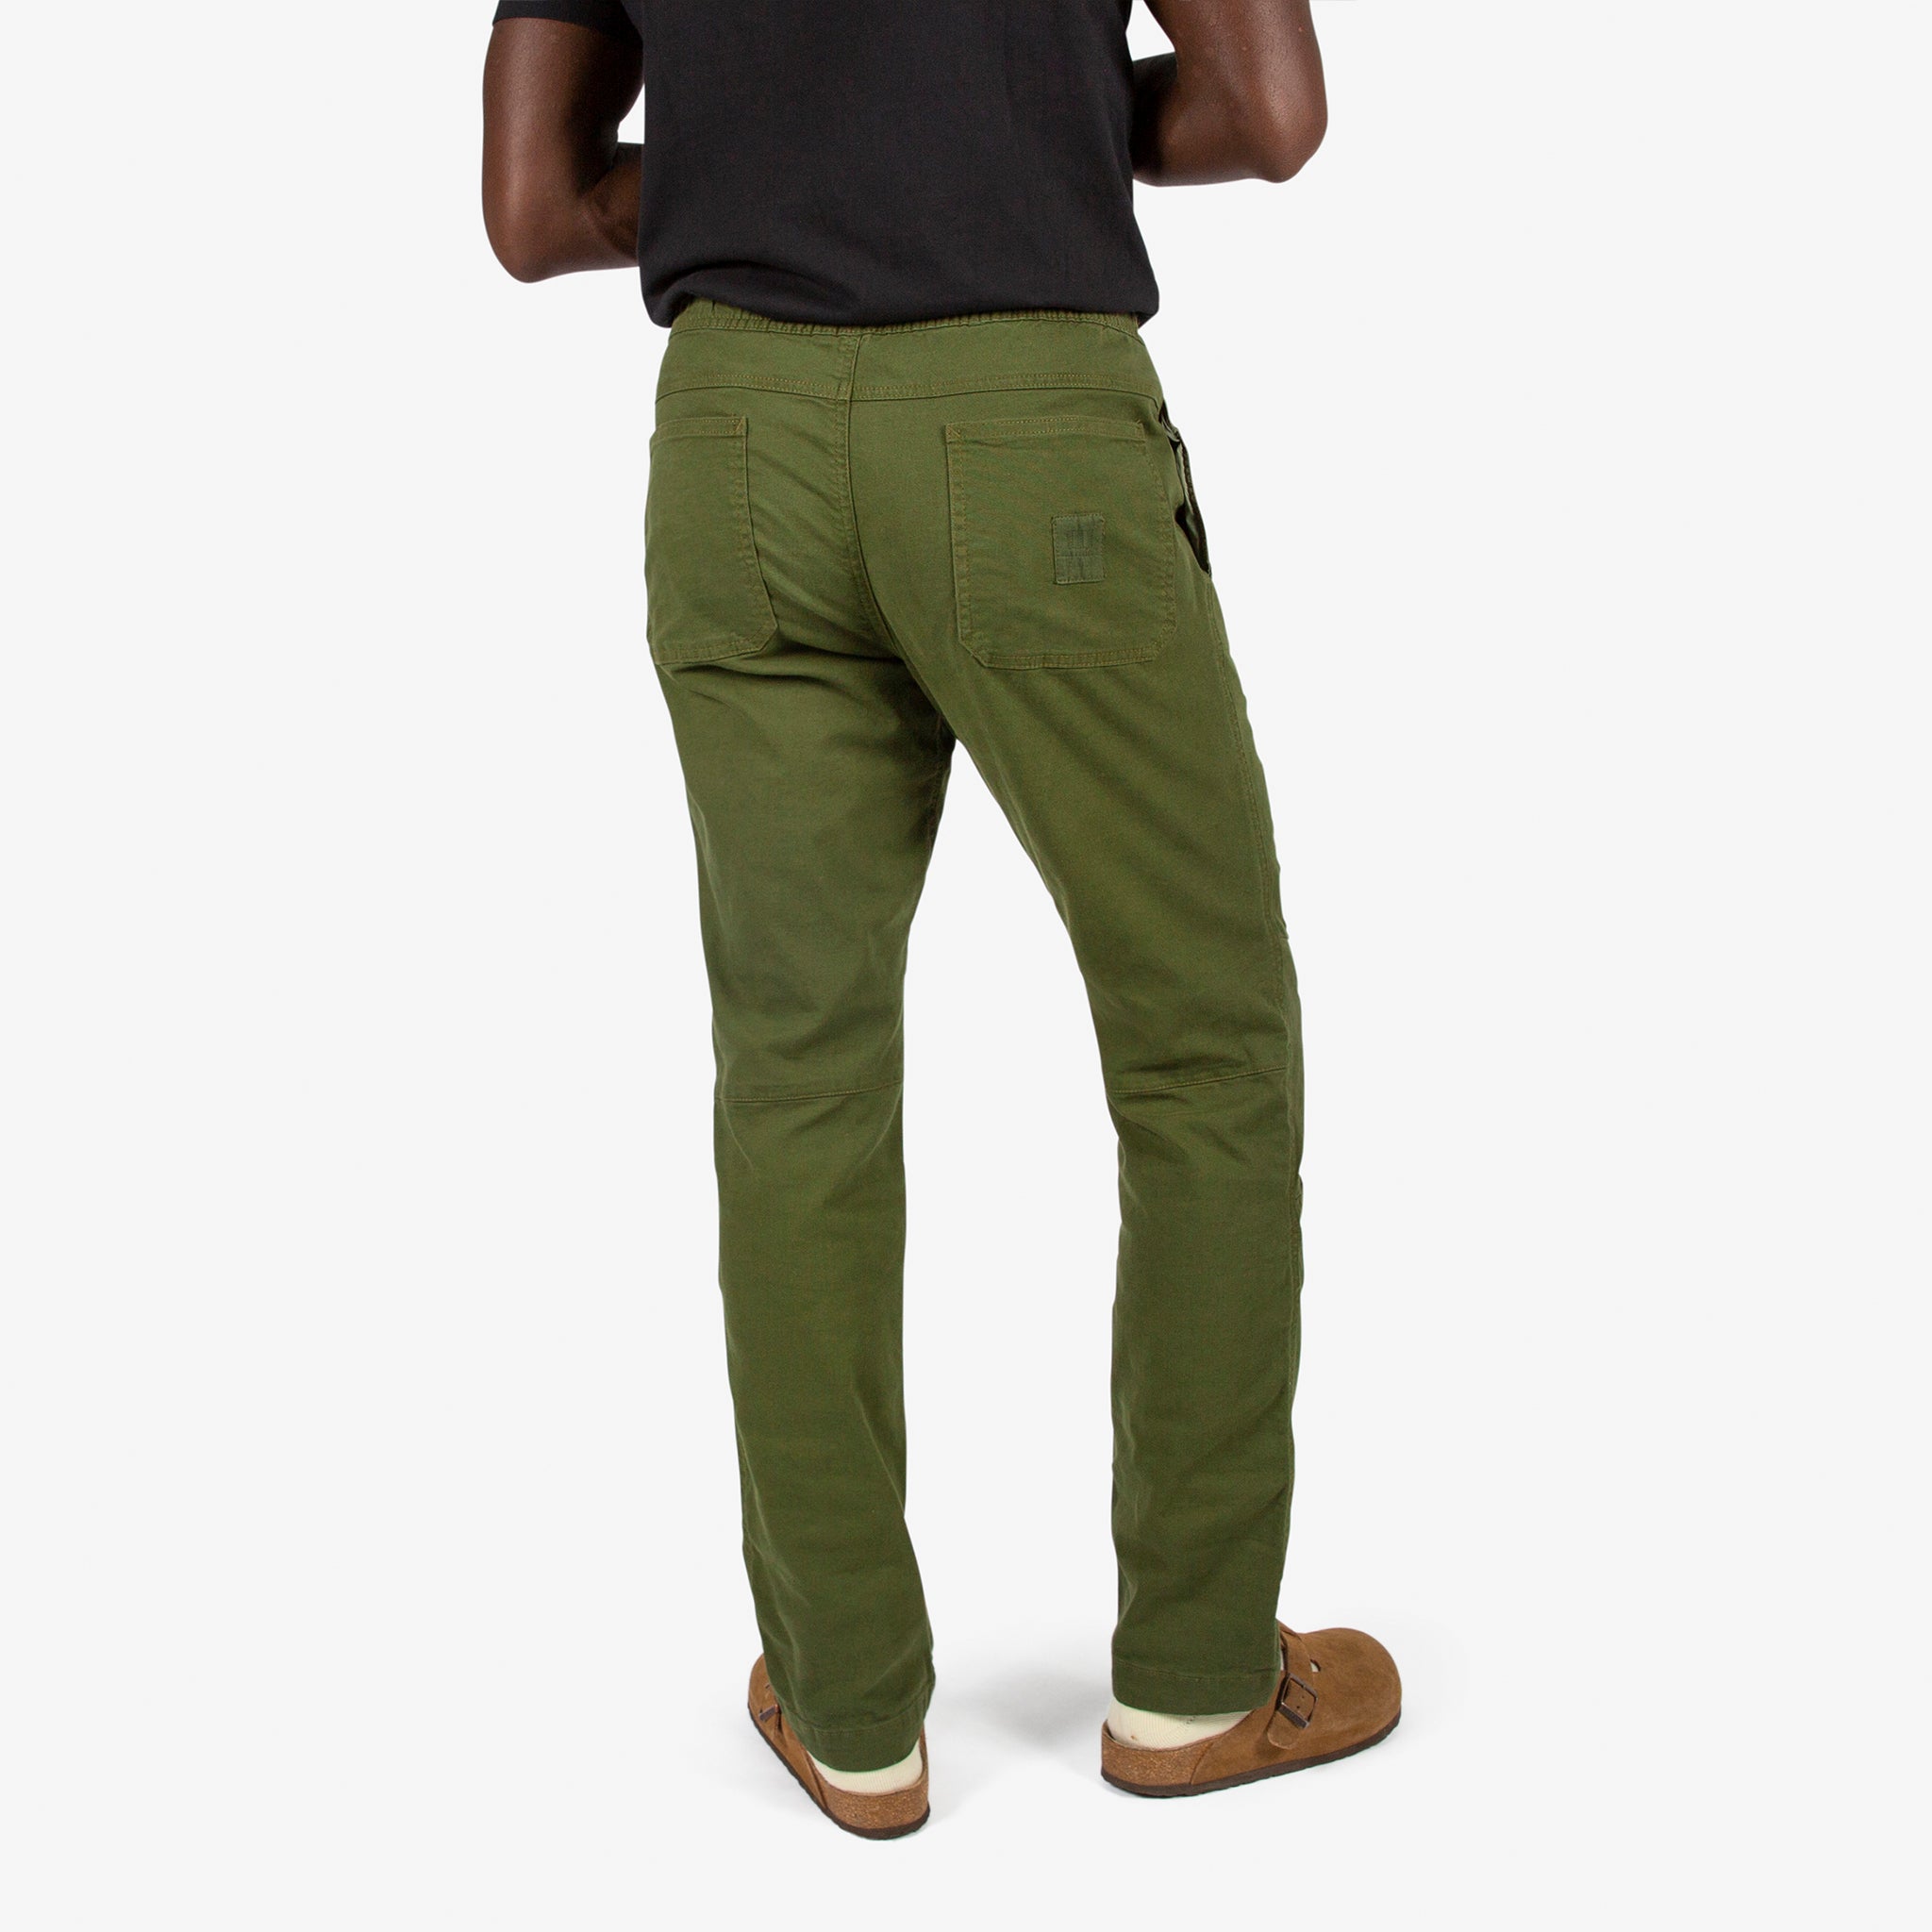 Close-up back model shot of Topo Designs Men's Dirt Shirt & Pants in "Olive" green.